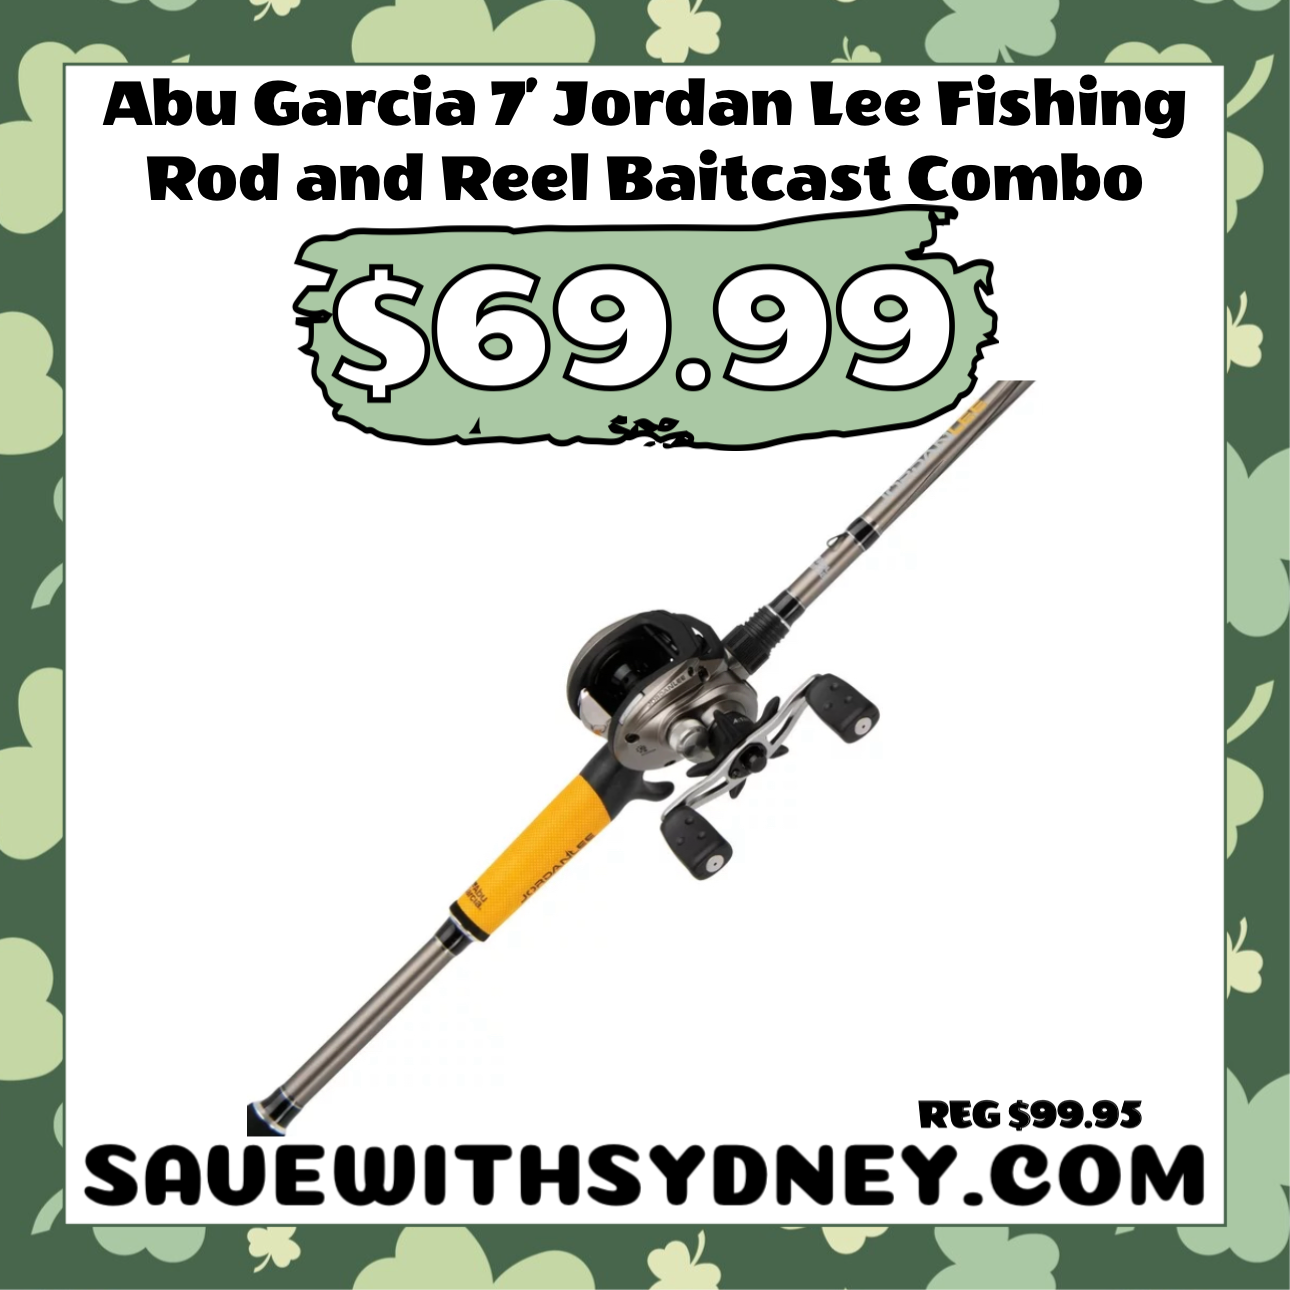 Abu Garcia 7' Jordan Lee Fishing Rod and Reel Baitcast Combo $69.99 — Save  with Sydney